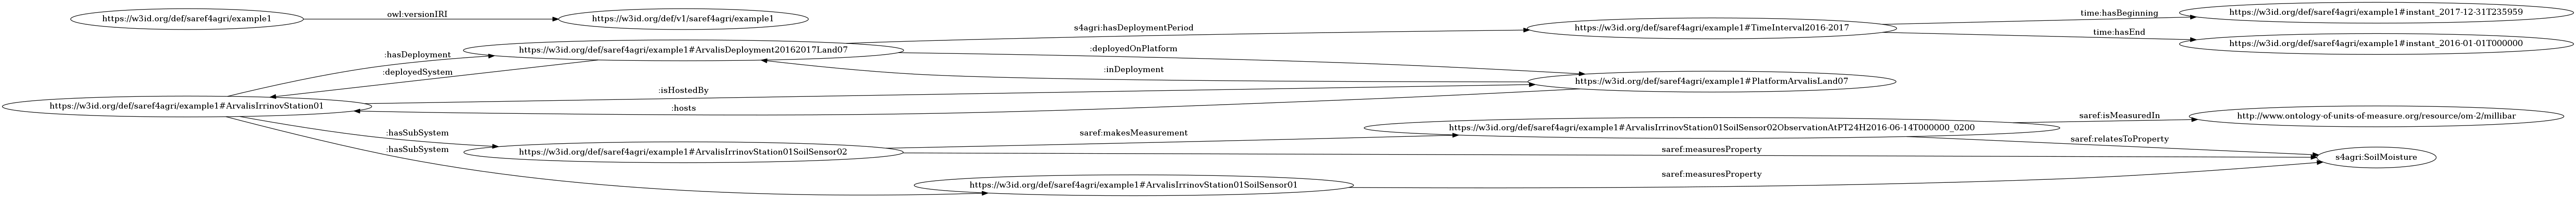 OnToology/SAREF4AGRI/examples/exampleIrrigationUseCase1.ttl/diagrams/ar2dtool-class/exampleIrrigationUseCase1.ttl.png